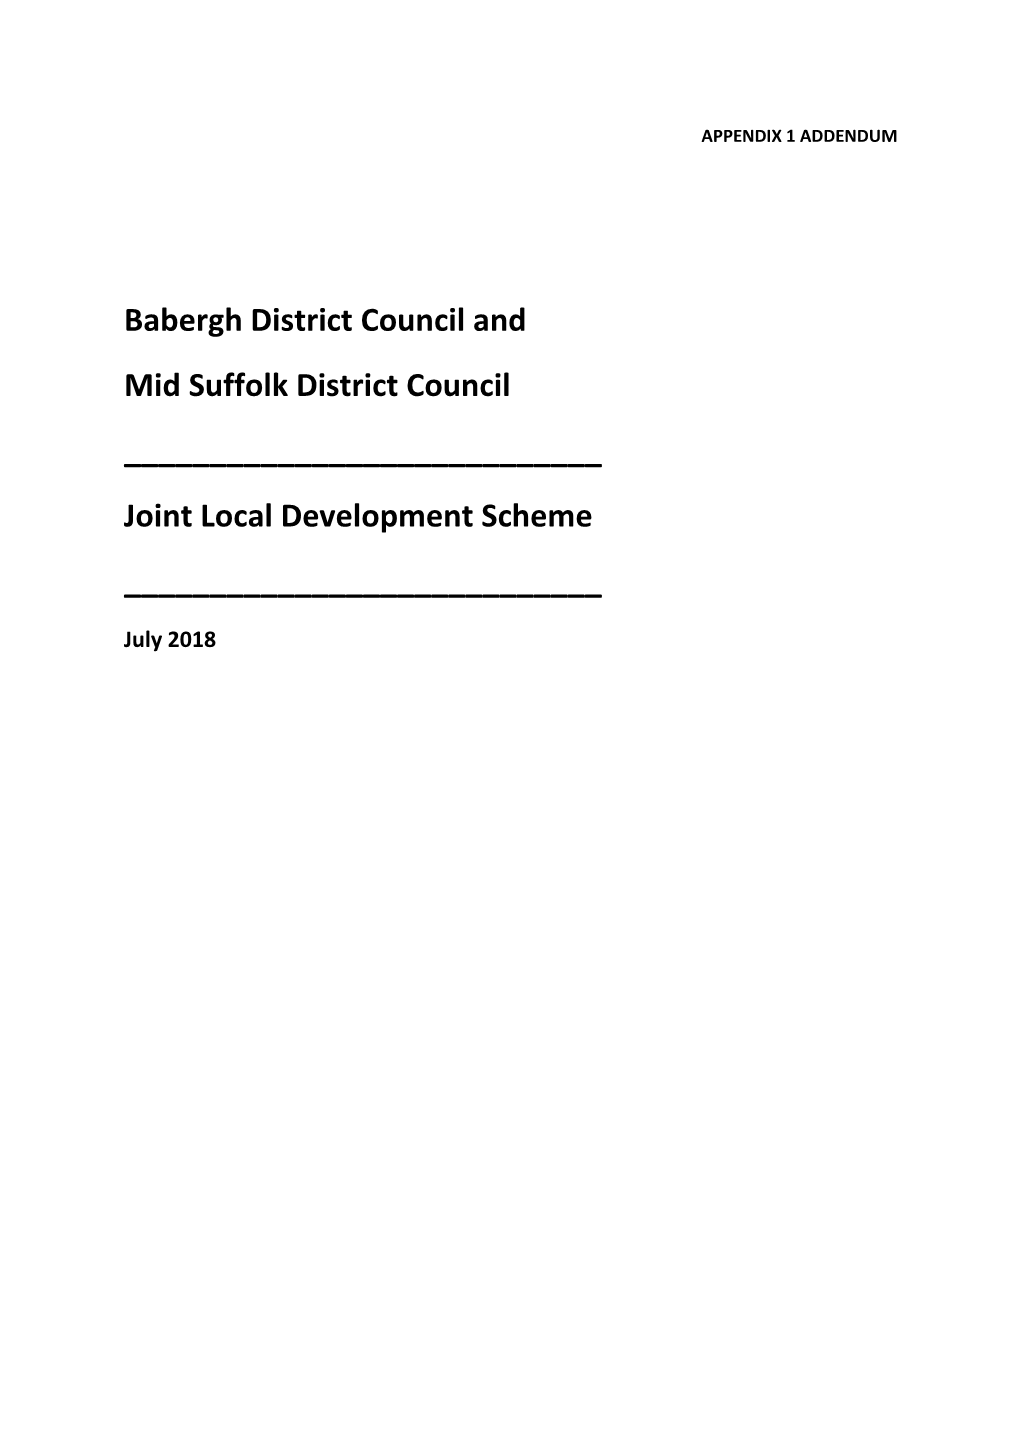 Babergh District Council and Mid Suffolk District Council ______Joint Local Development Scheme ______